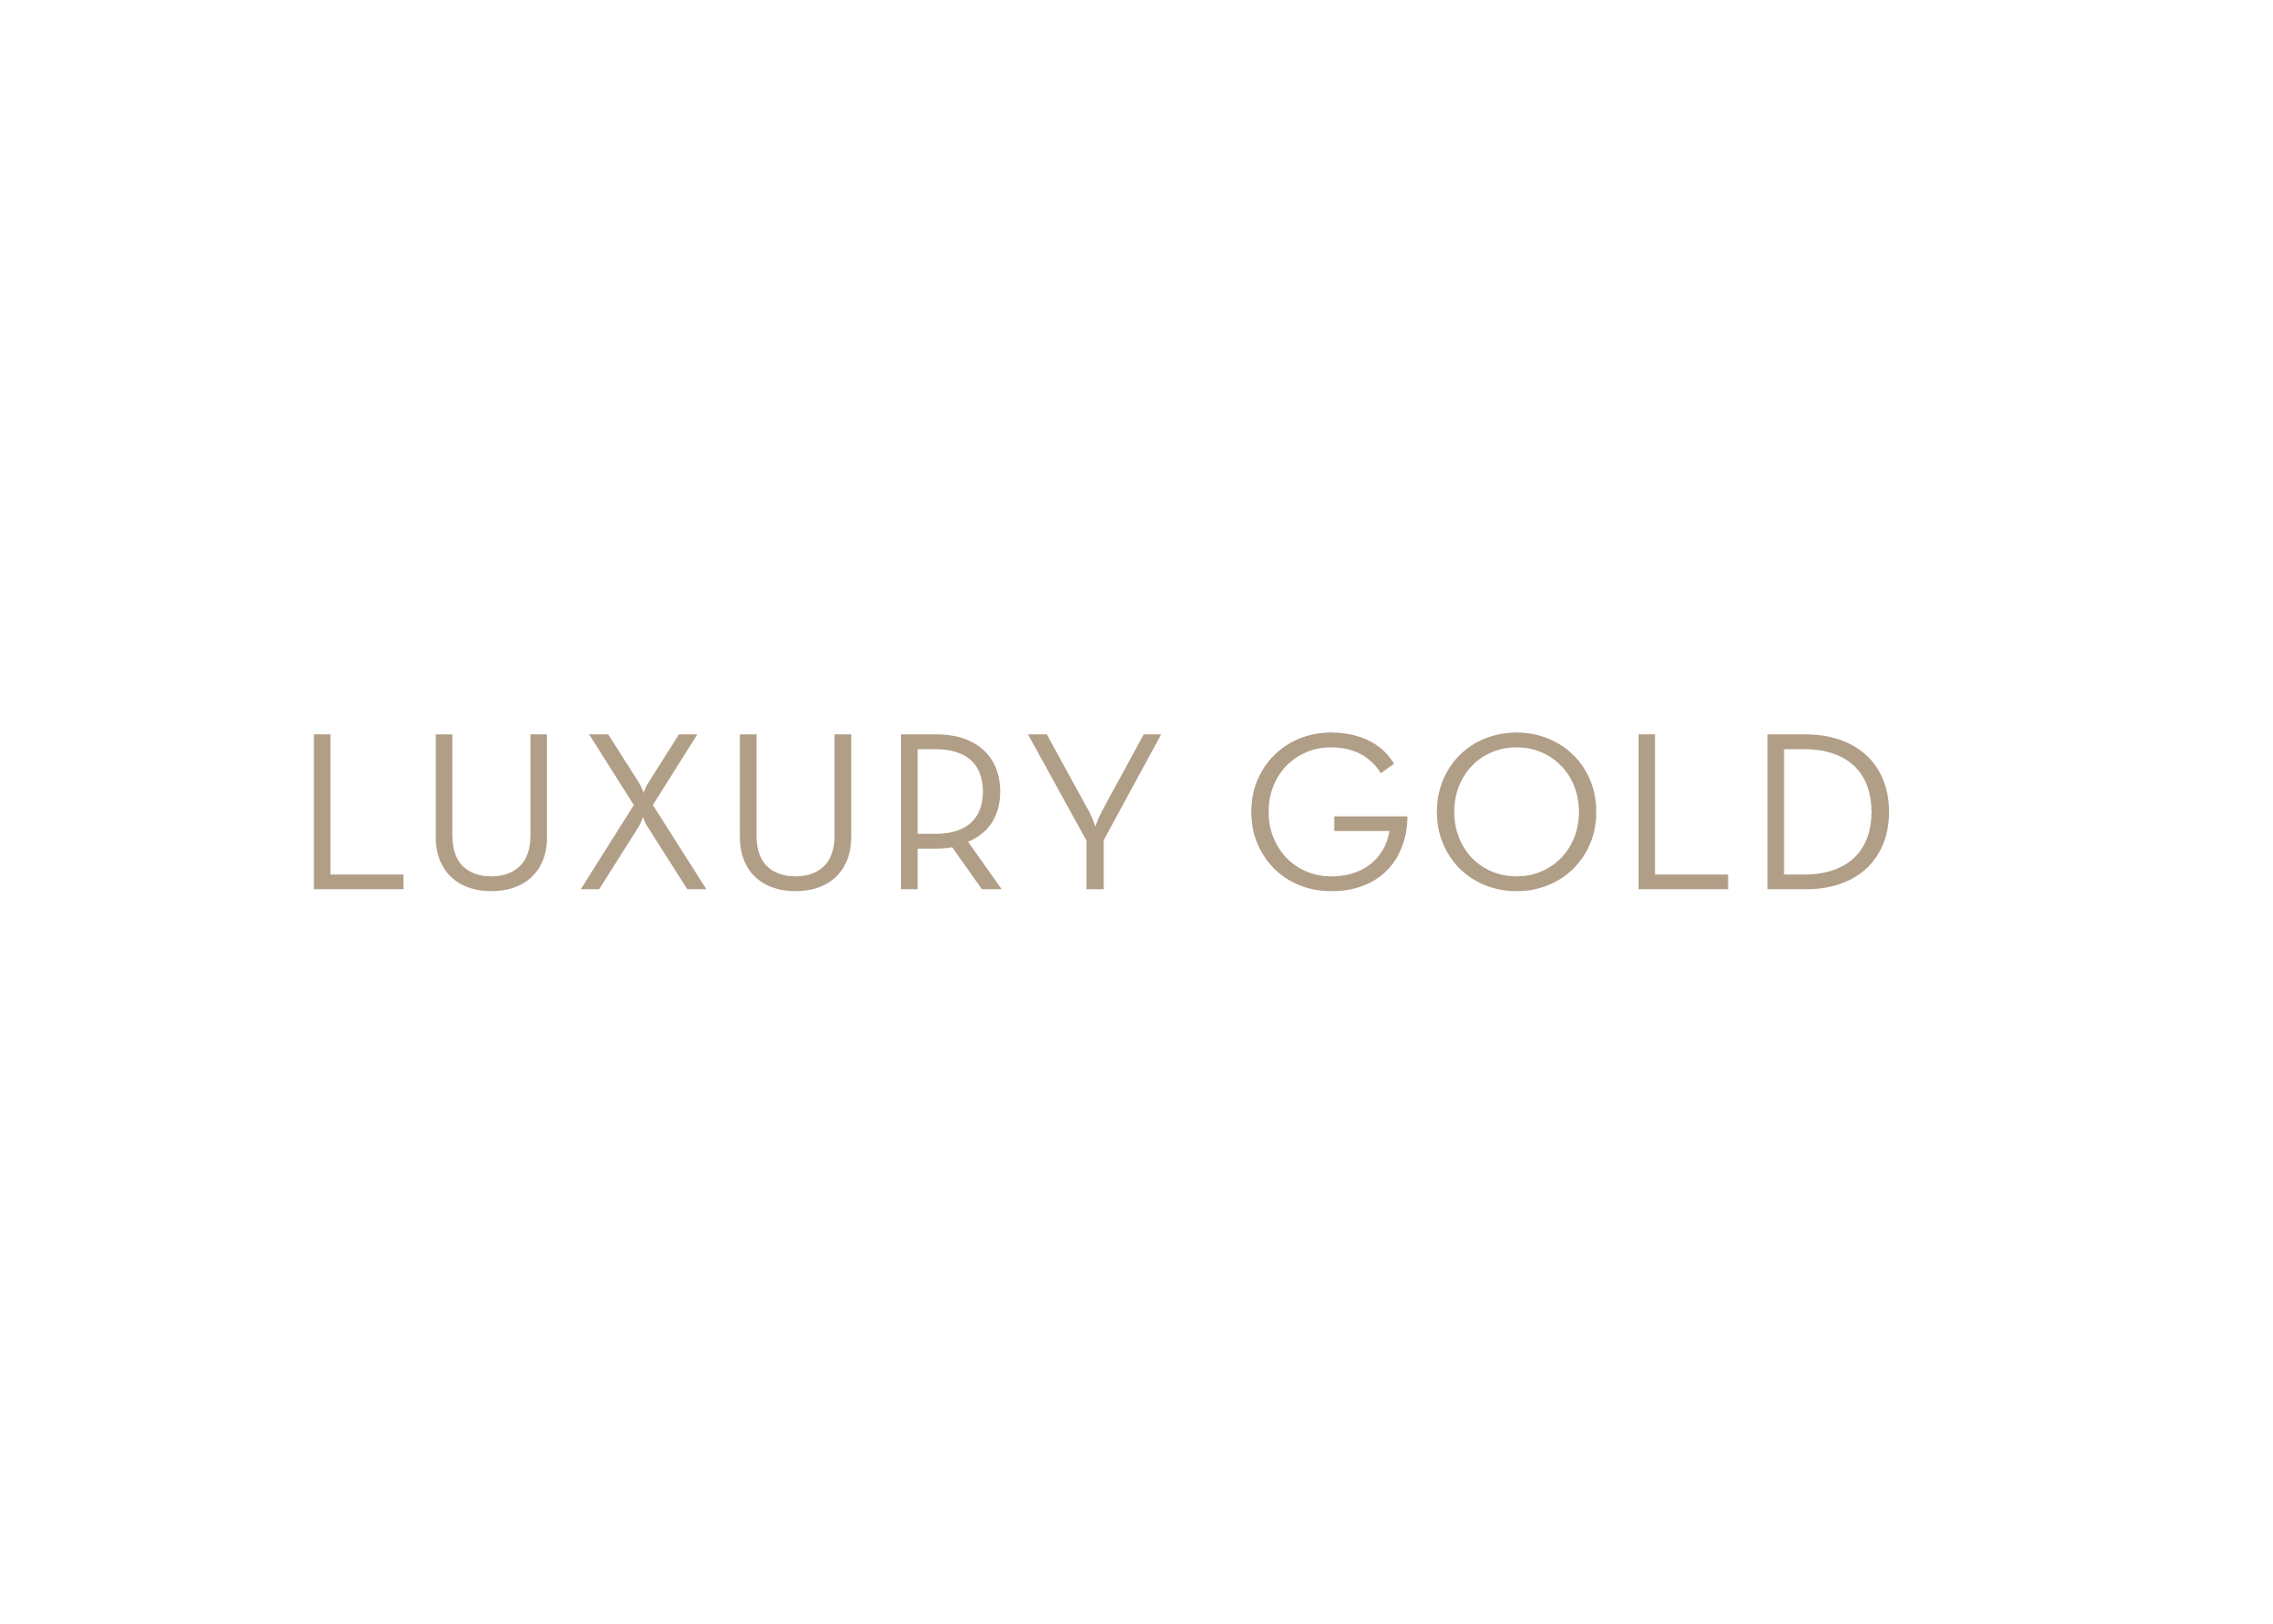 luxury gold logo